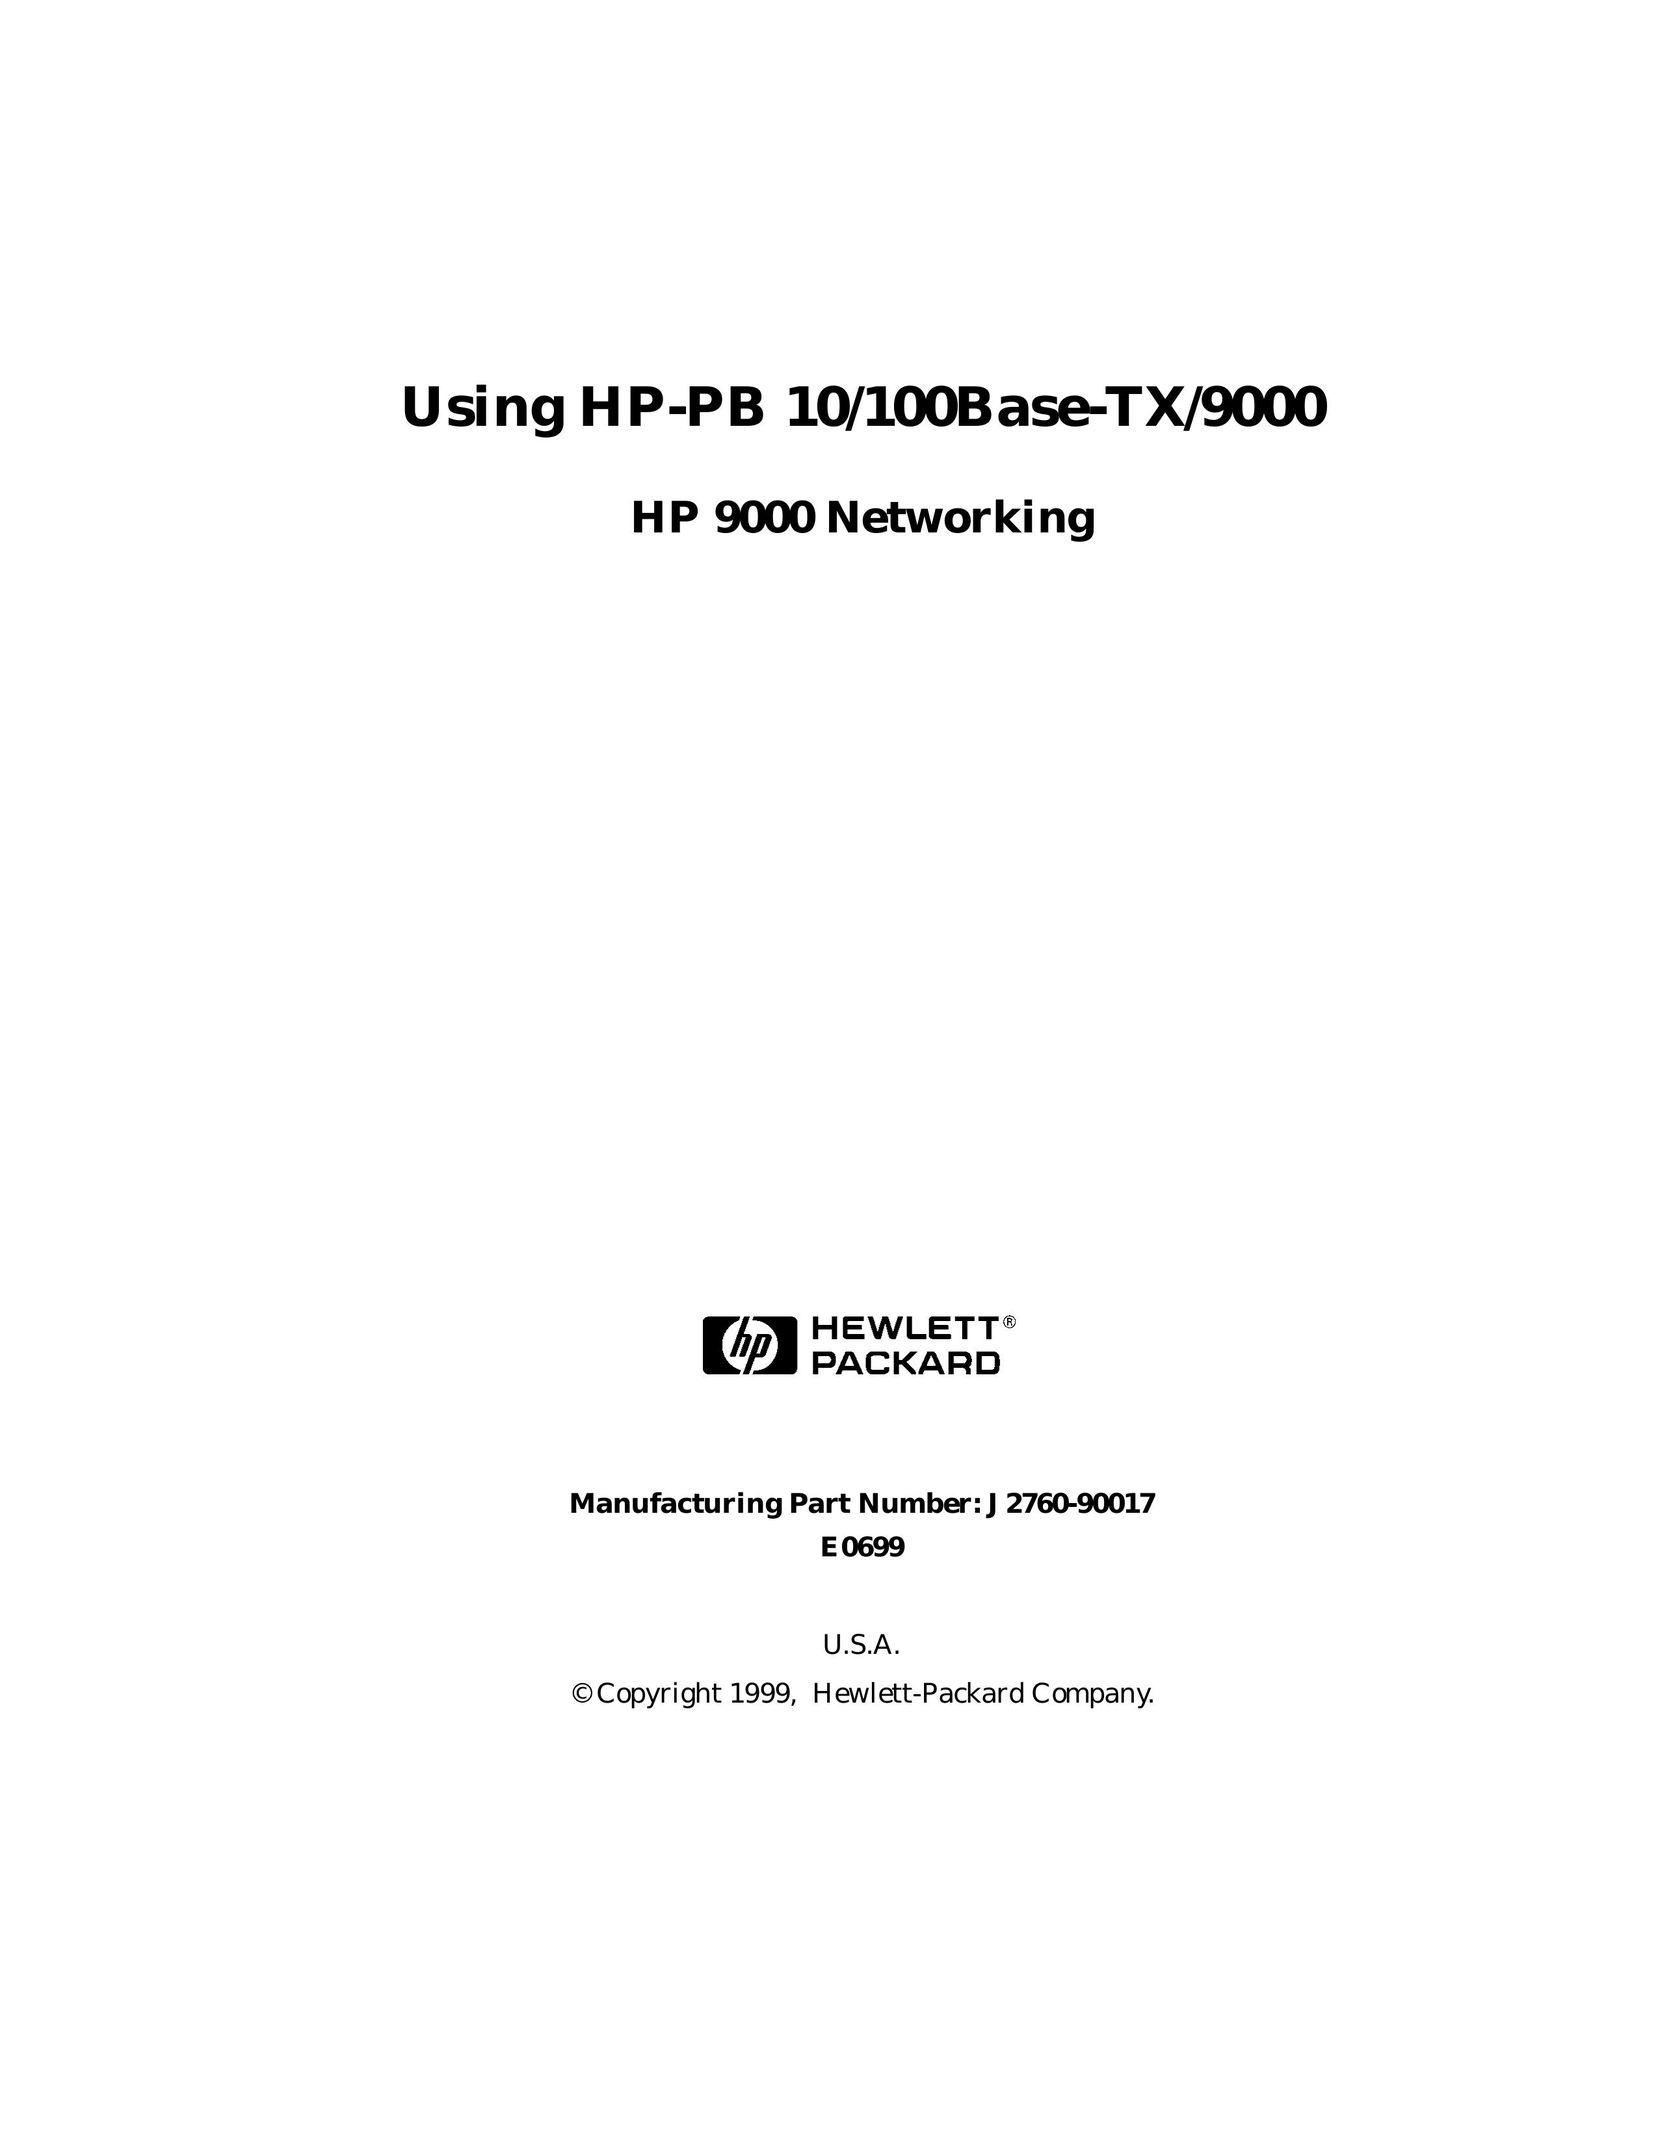 HP (Hewlett-Packard) HP-PB 10 Network Hardware User Manual